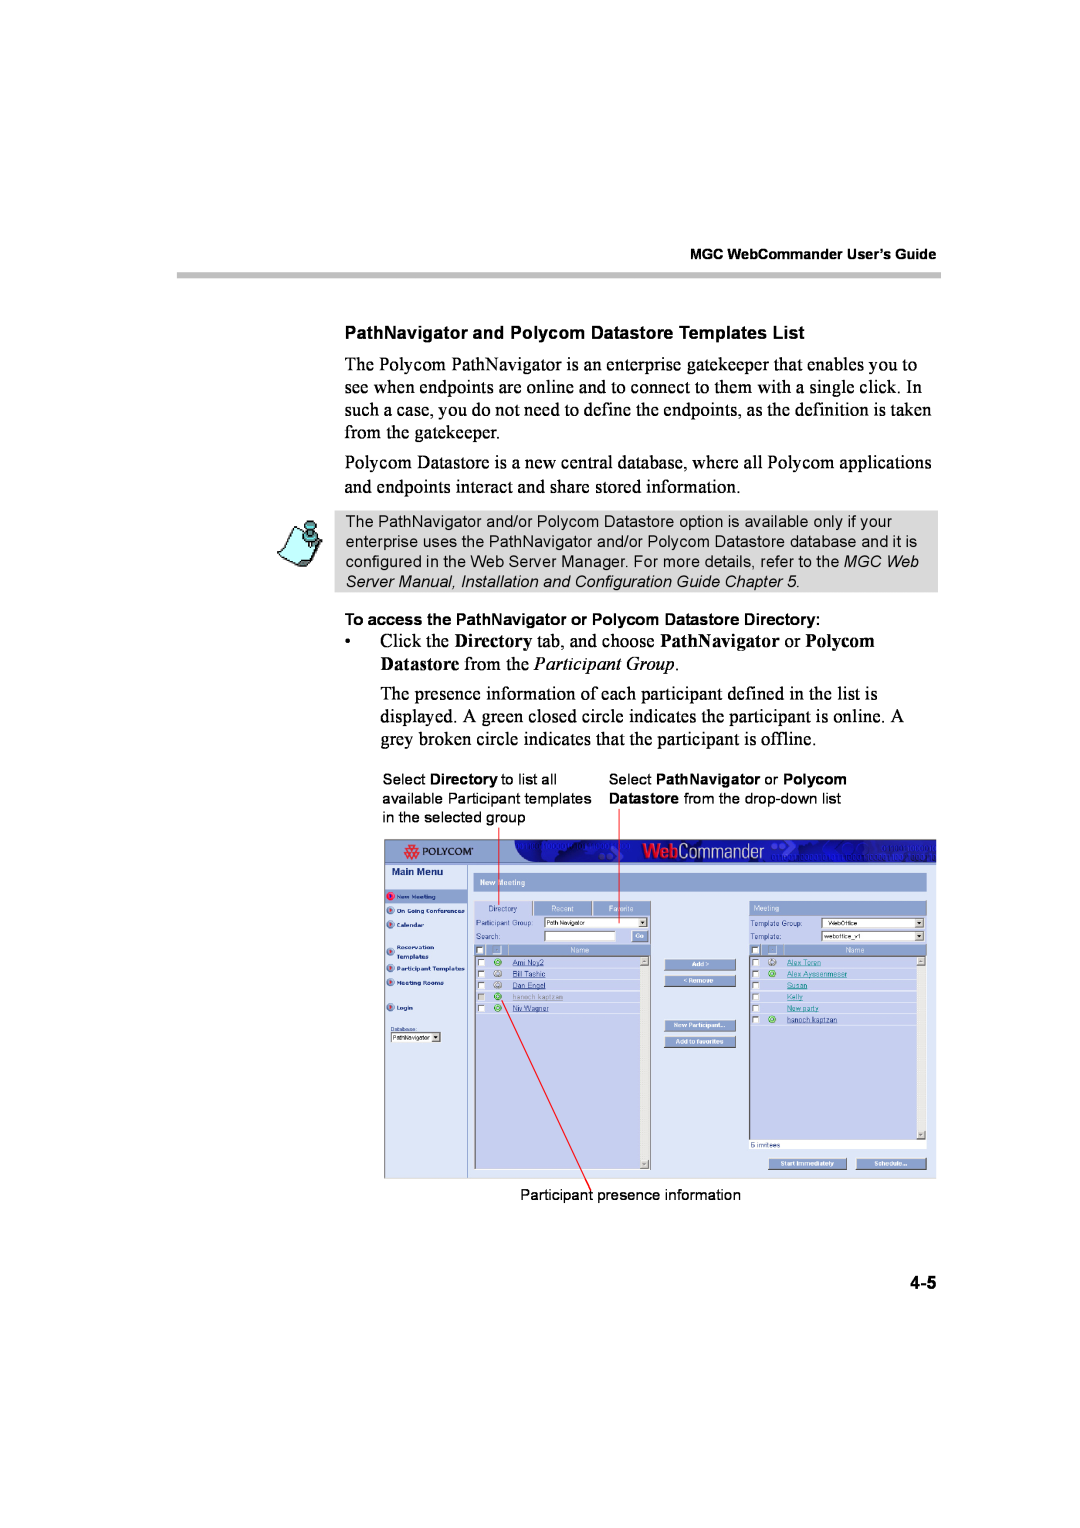 Polycom 8 manual MGC WebCommander User’s Guide, Select PathNavigator or Polycom 